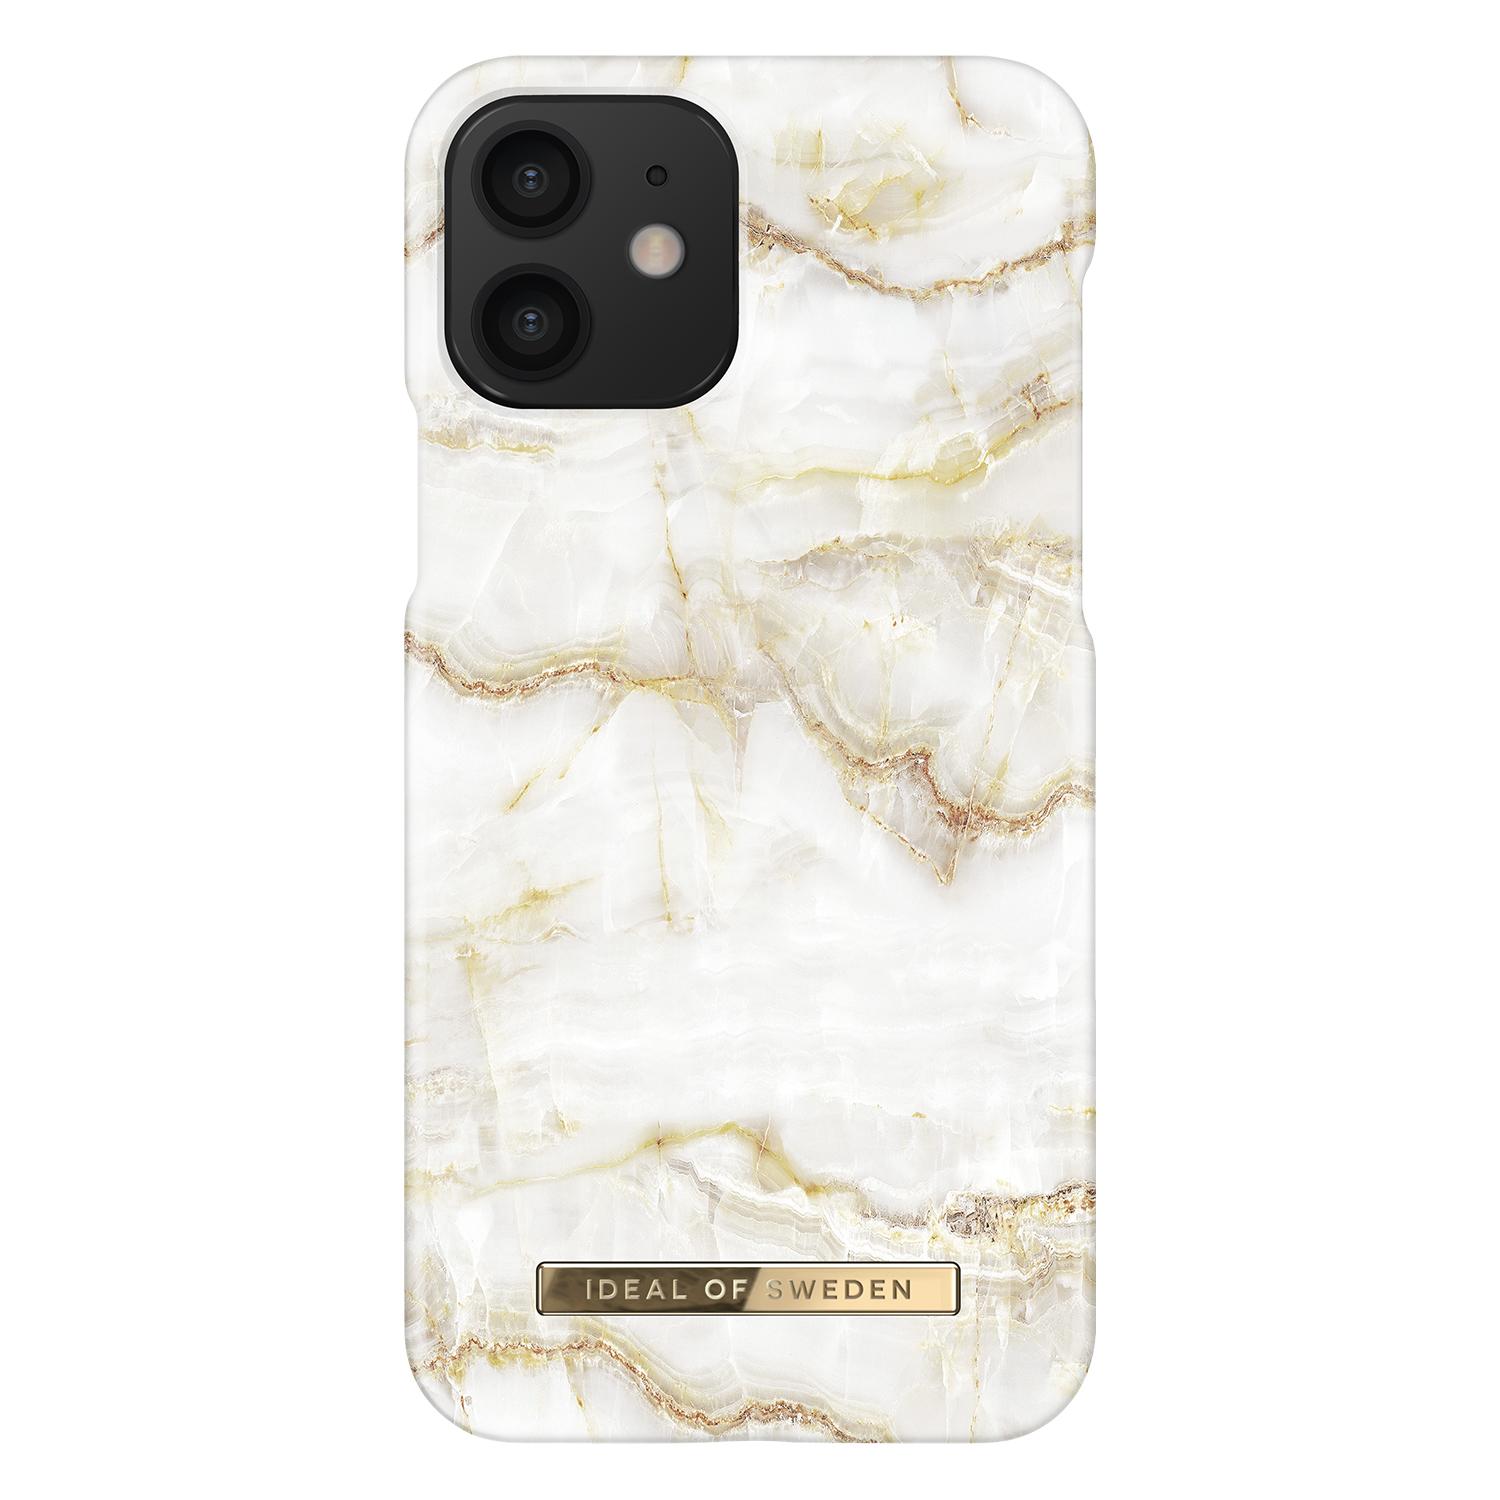 Funda Fashion Case iPhone 12/12 Pro Golden Pearl Marble